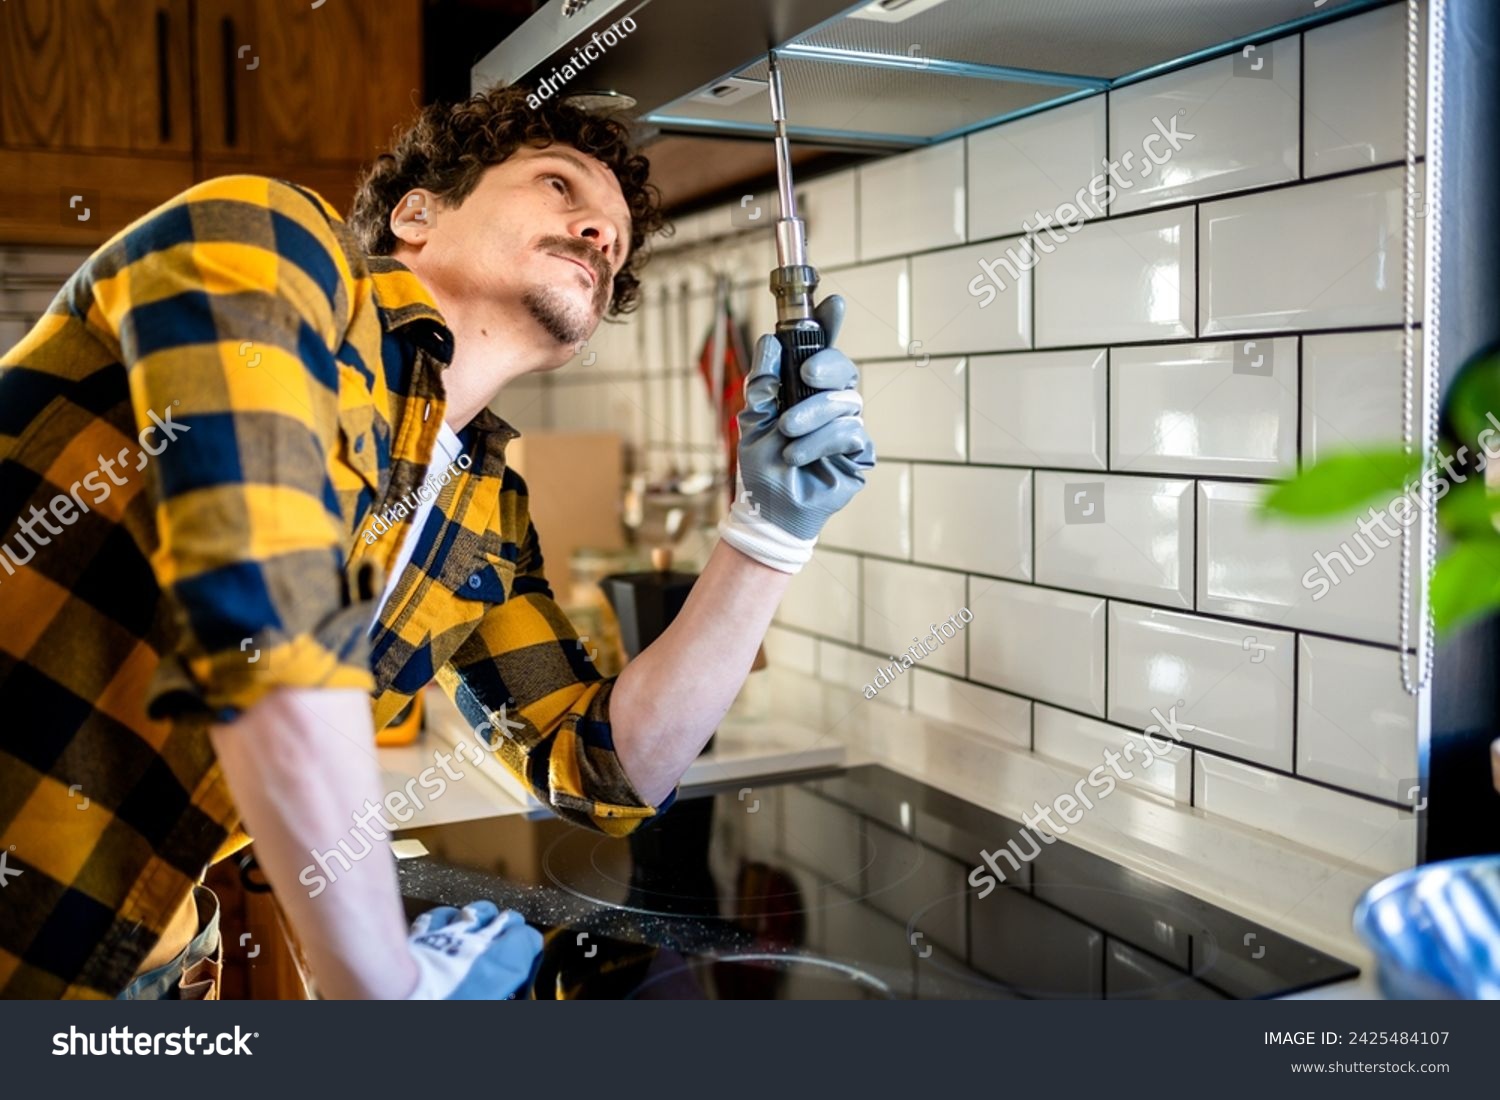 Latino man fixing aspirator in the kitchen. #2425484107